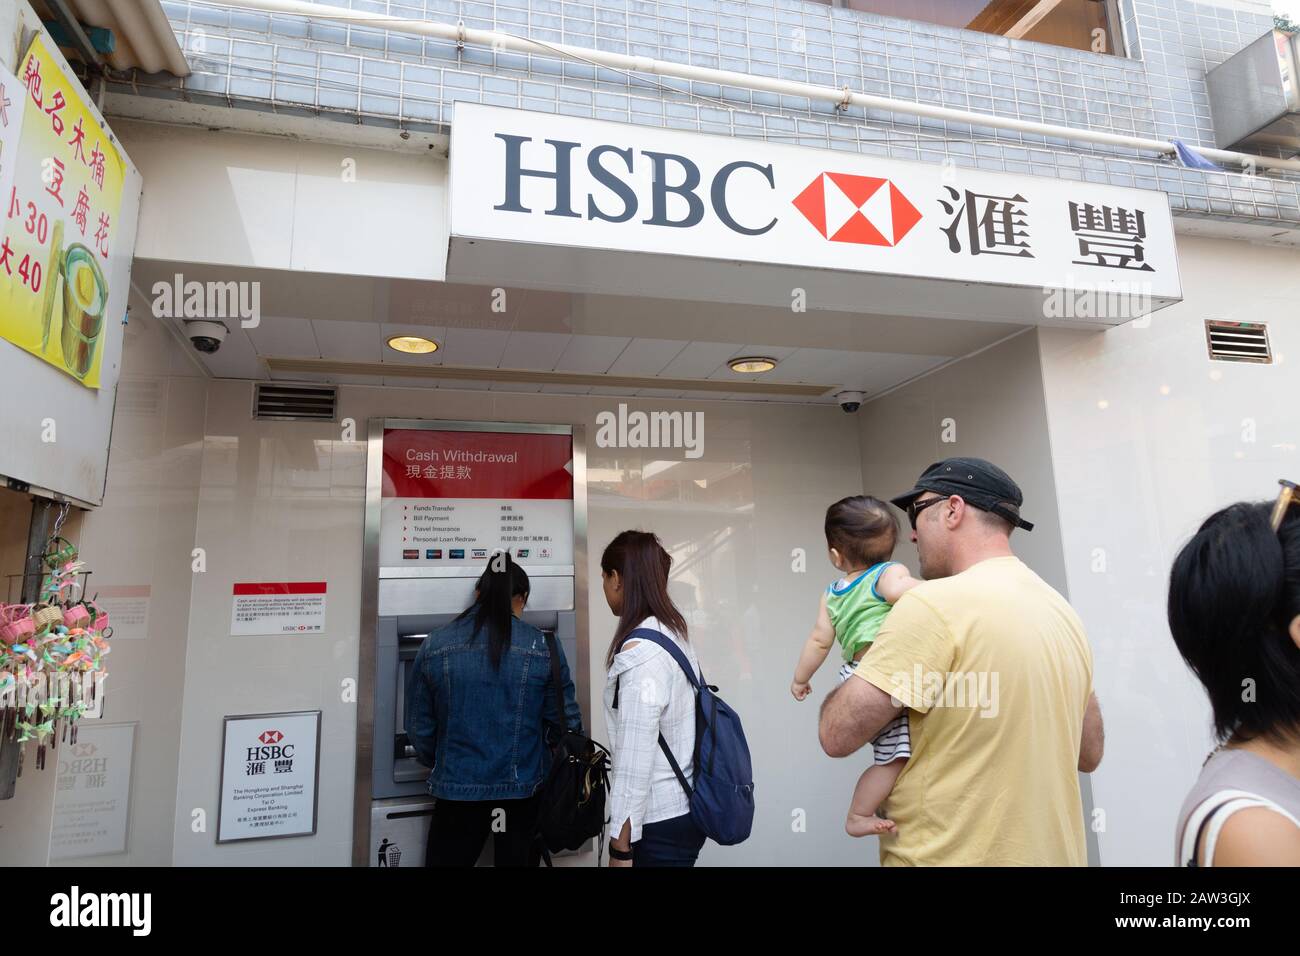 HSBC Bank, Hong Kong Asia - persone che utilizzano un bancomat HSBC per prelevare denaro, Hong Kong Asia Foto Stock